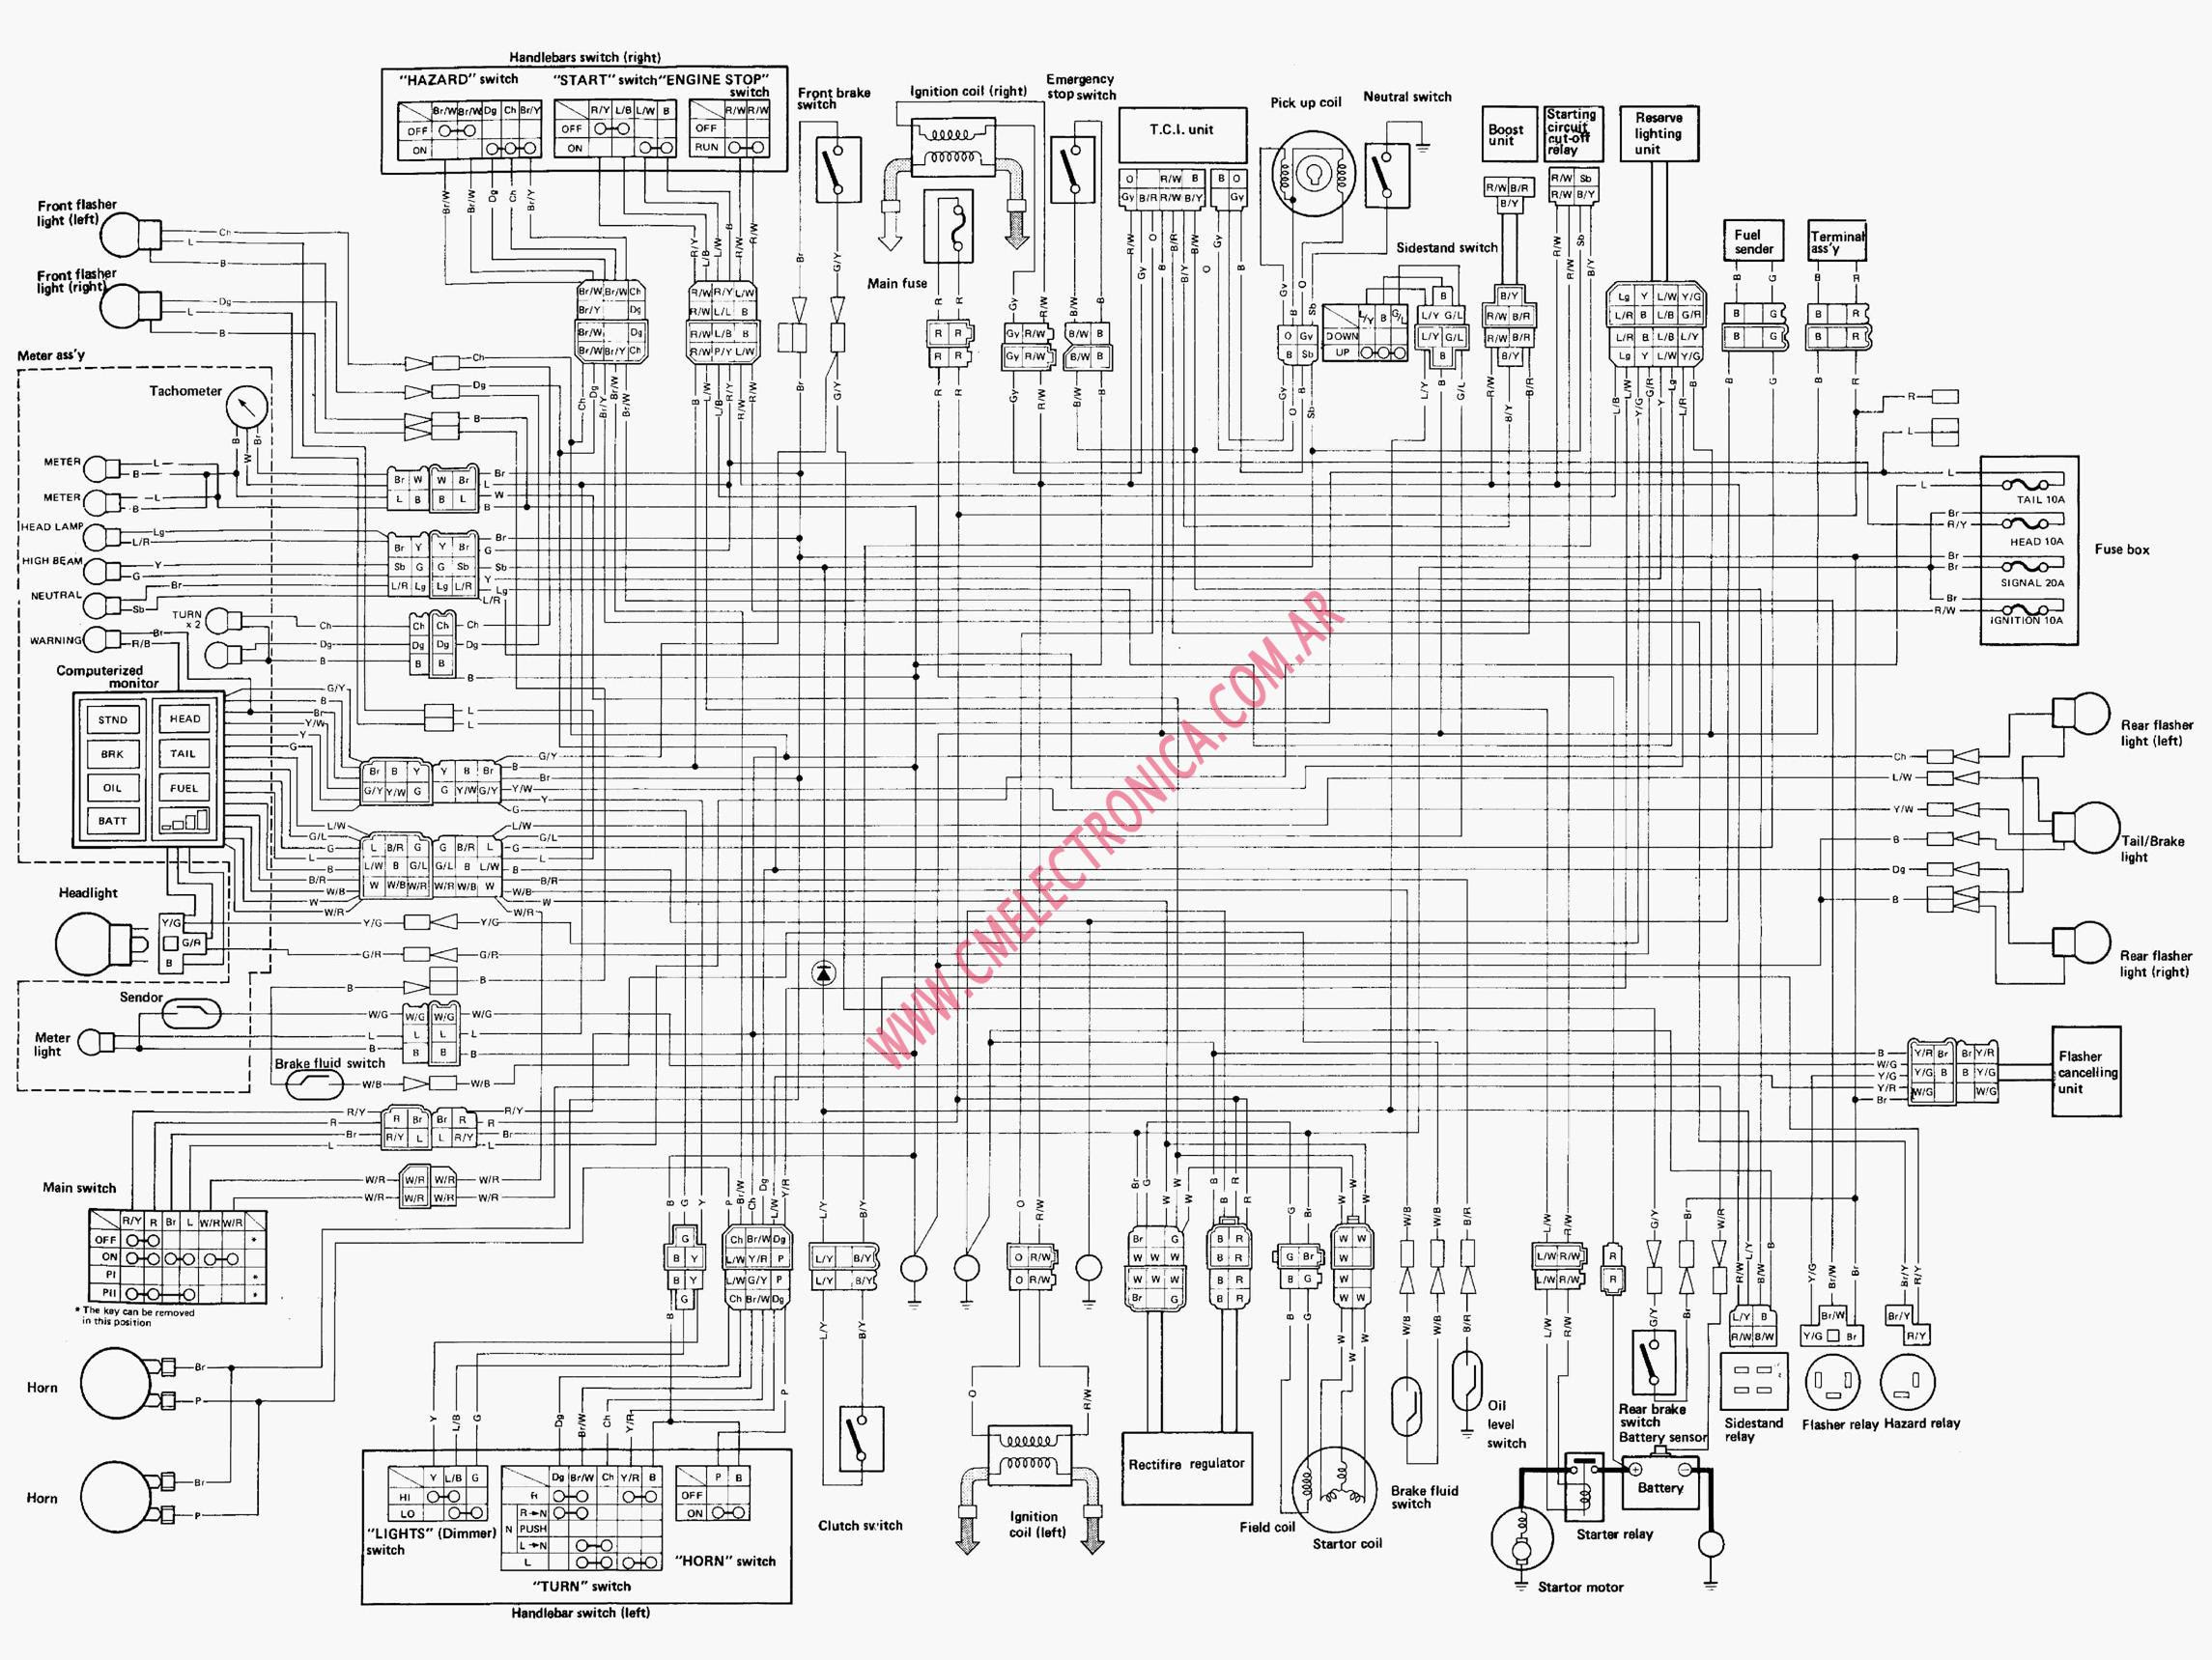 1981 Yamaha Virago 750 Wiring Diagram from lh5.googleusercontent.com